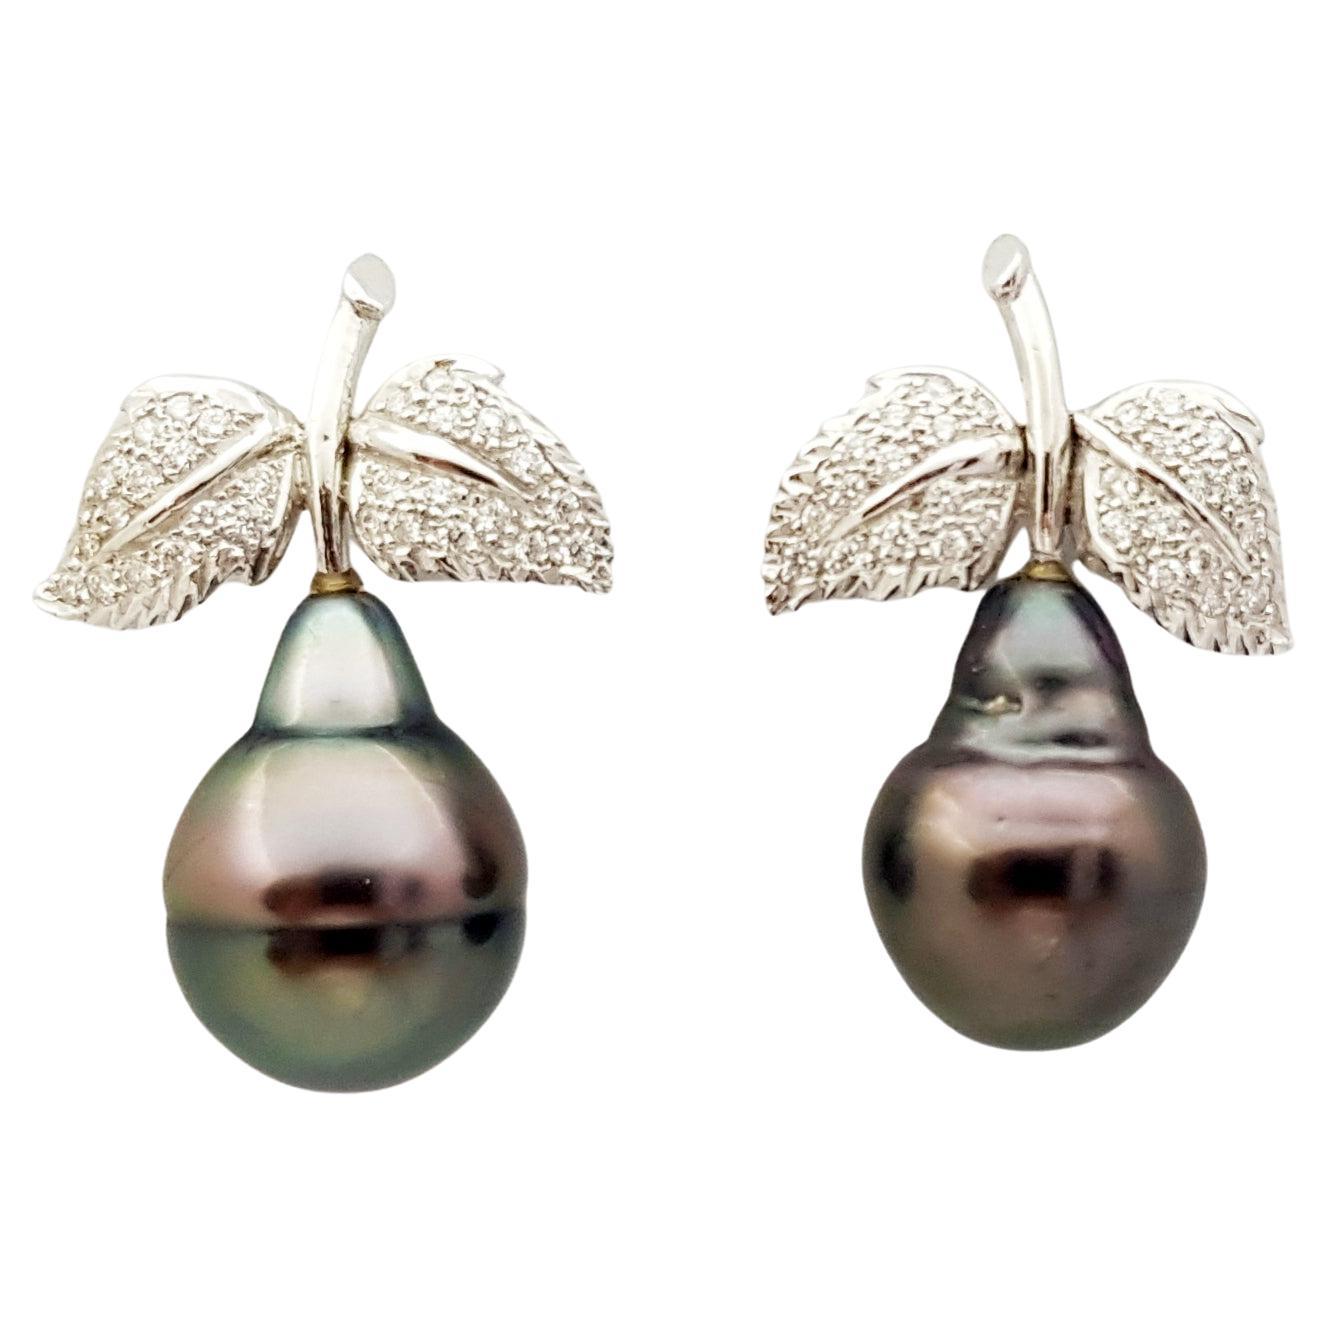 South Sea Pearl with Diamond Earrings Set in 18 Karat White Gold Settings